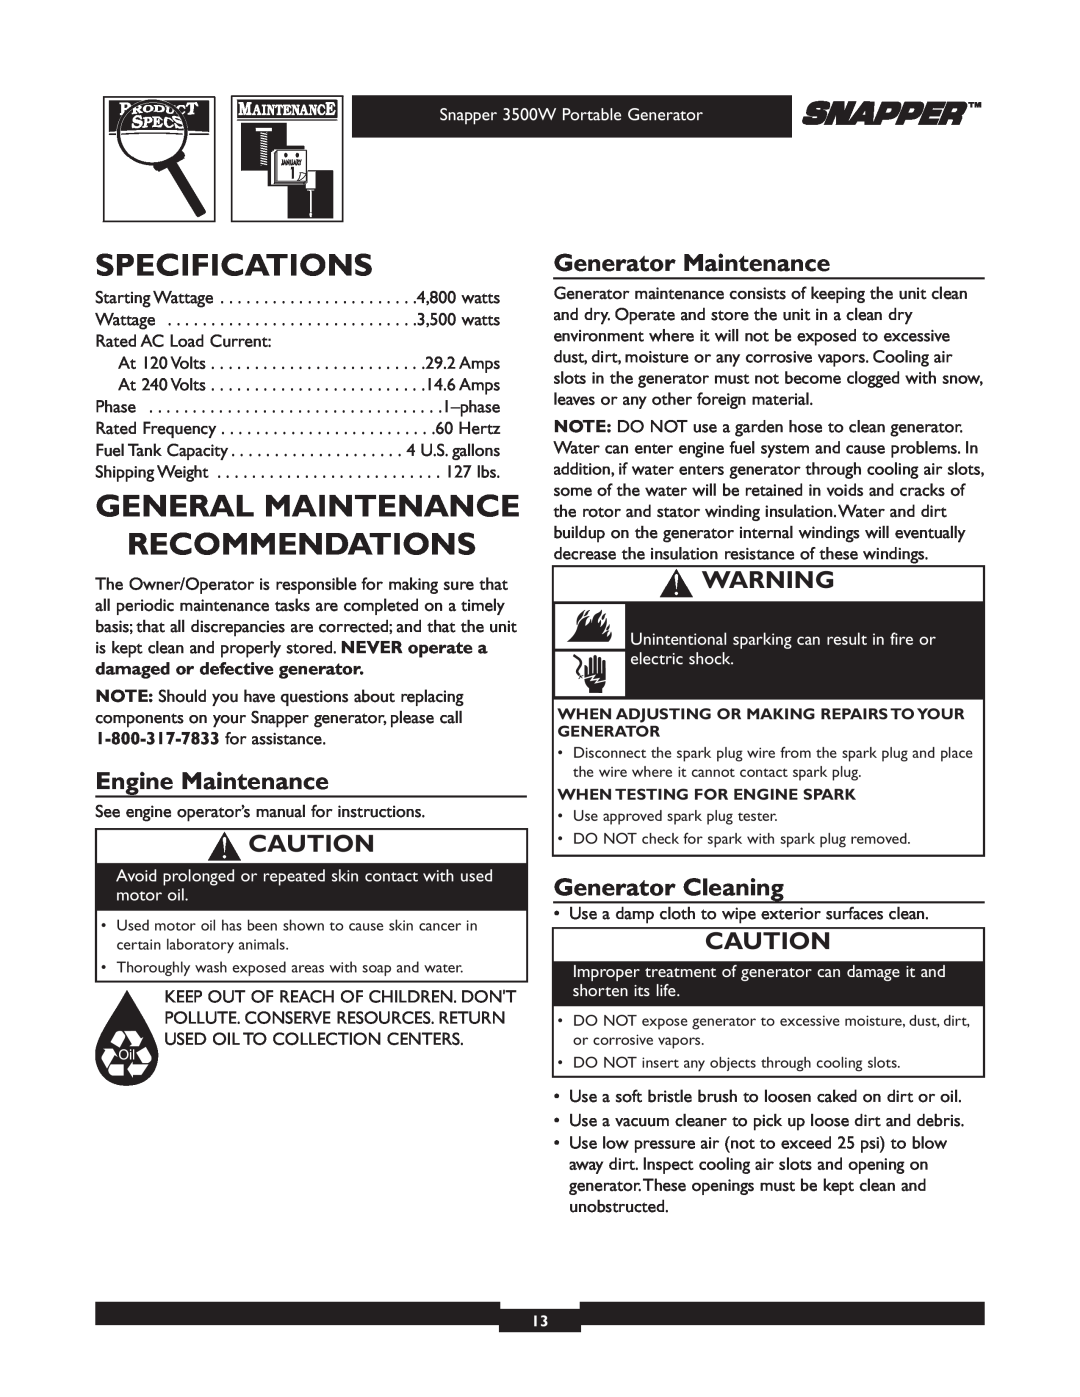 Snapper 030214 manual Specifications, General Maintenance Recommendations, Engine Maintenance, Generator Maintenance 